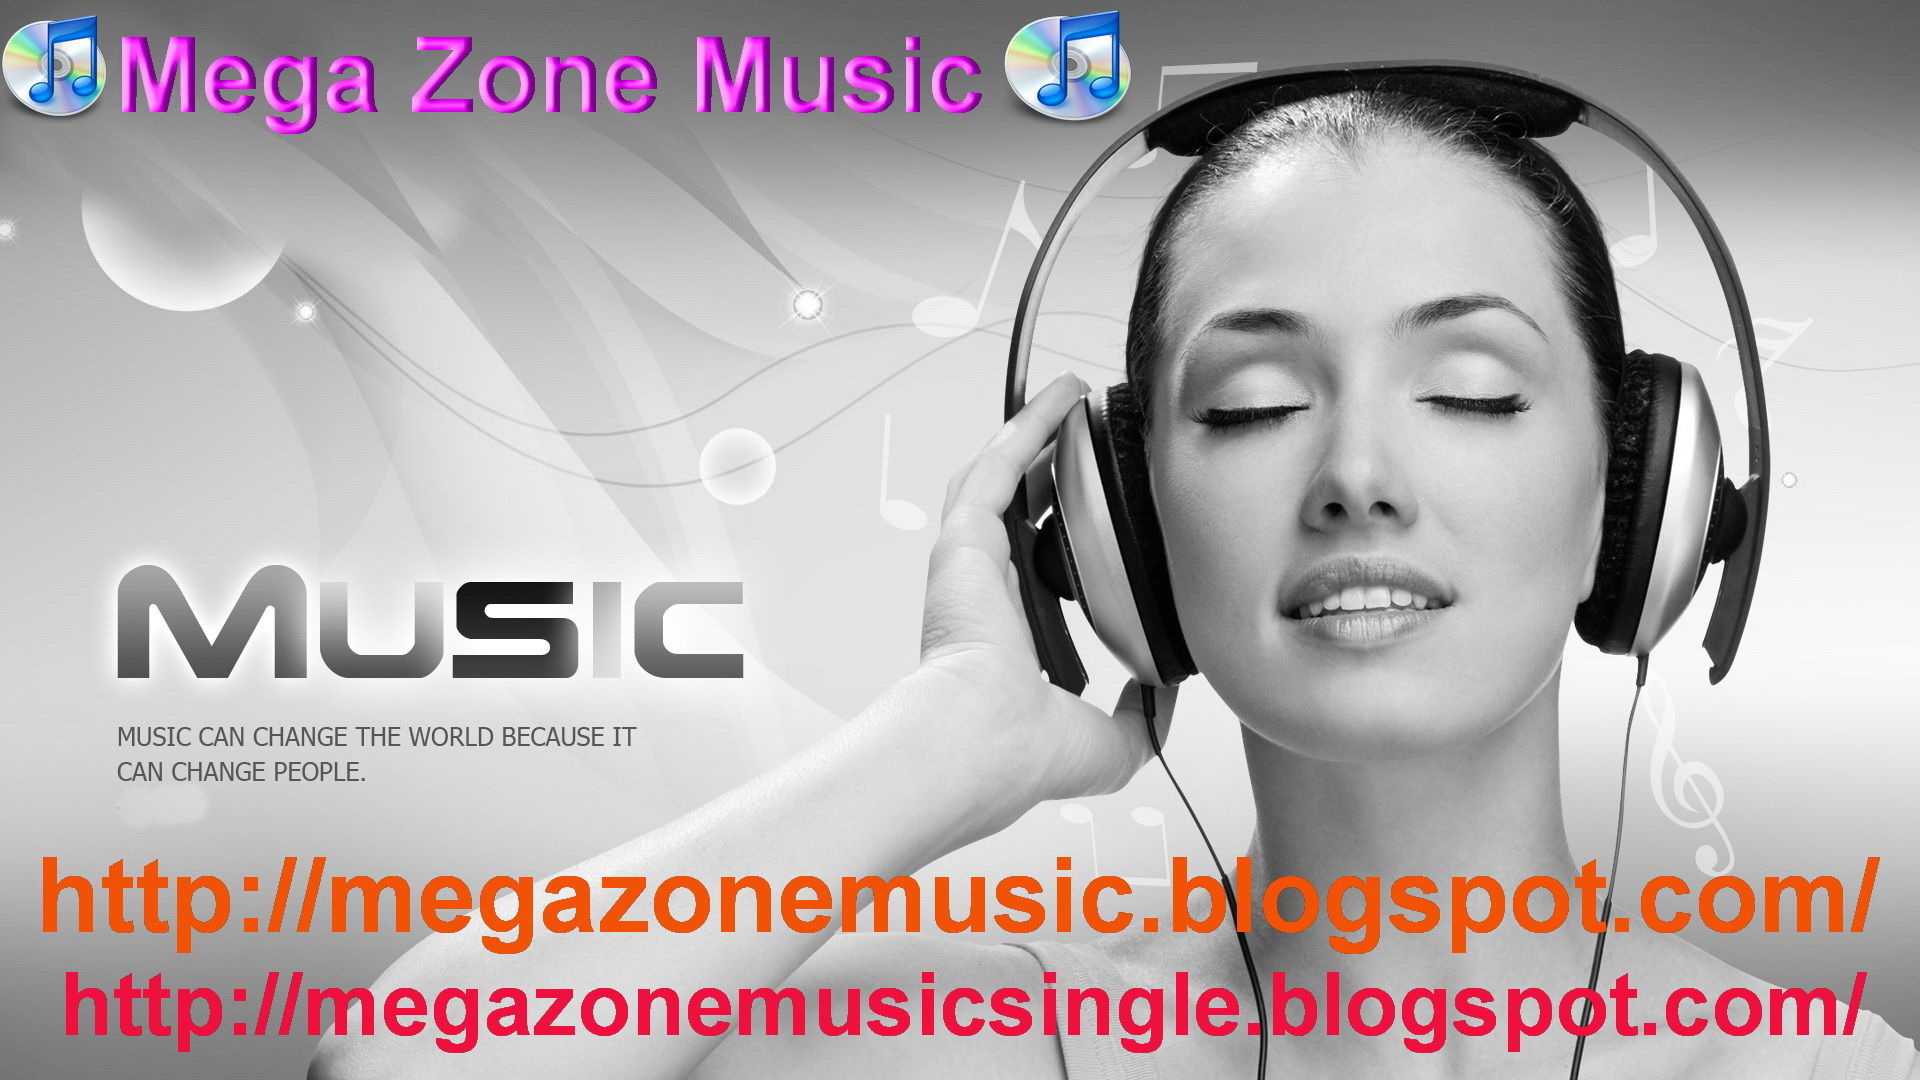 Музыка студийная flac слушать. Lossless музыка. Music Zone. 2015 Music. Lossless музыка слушать.